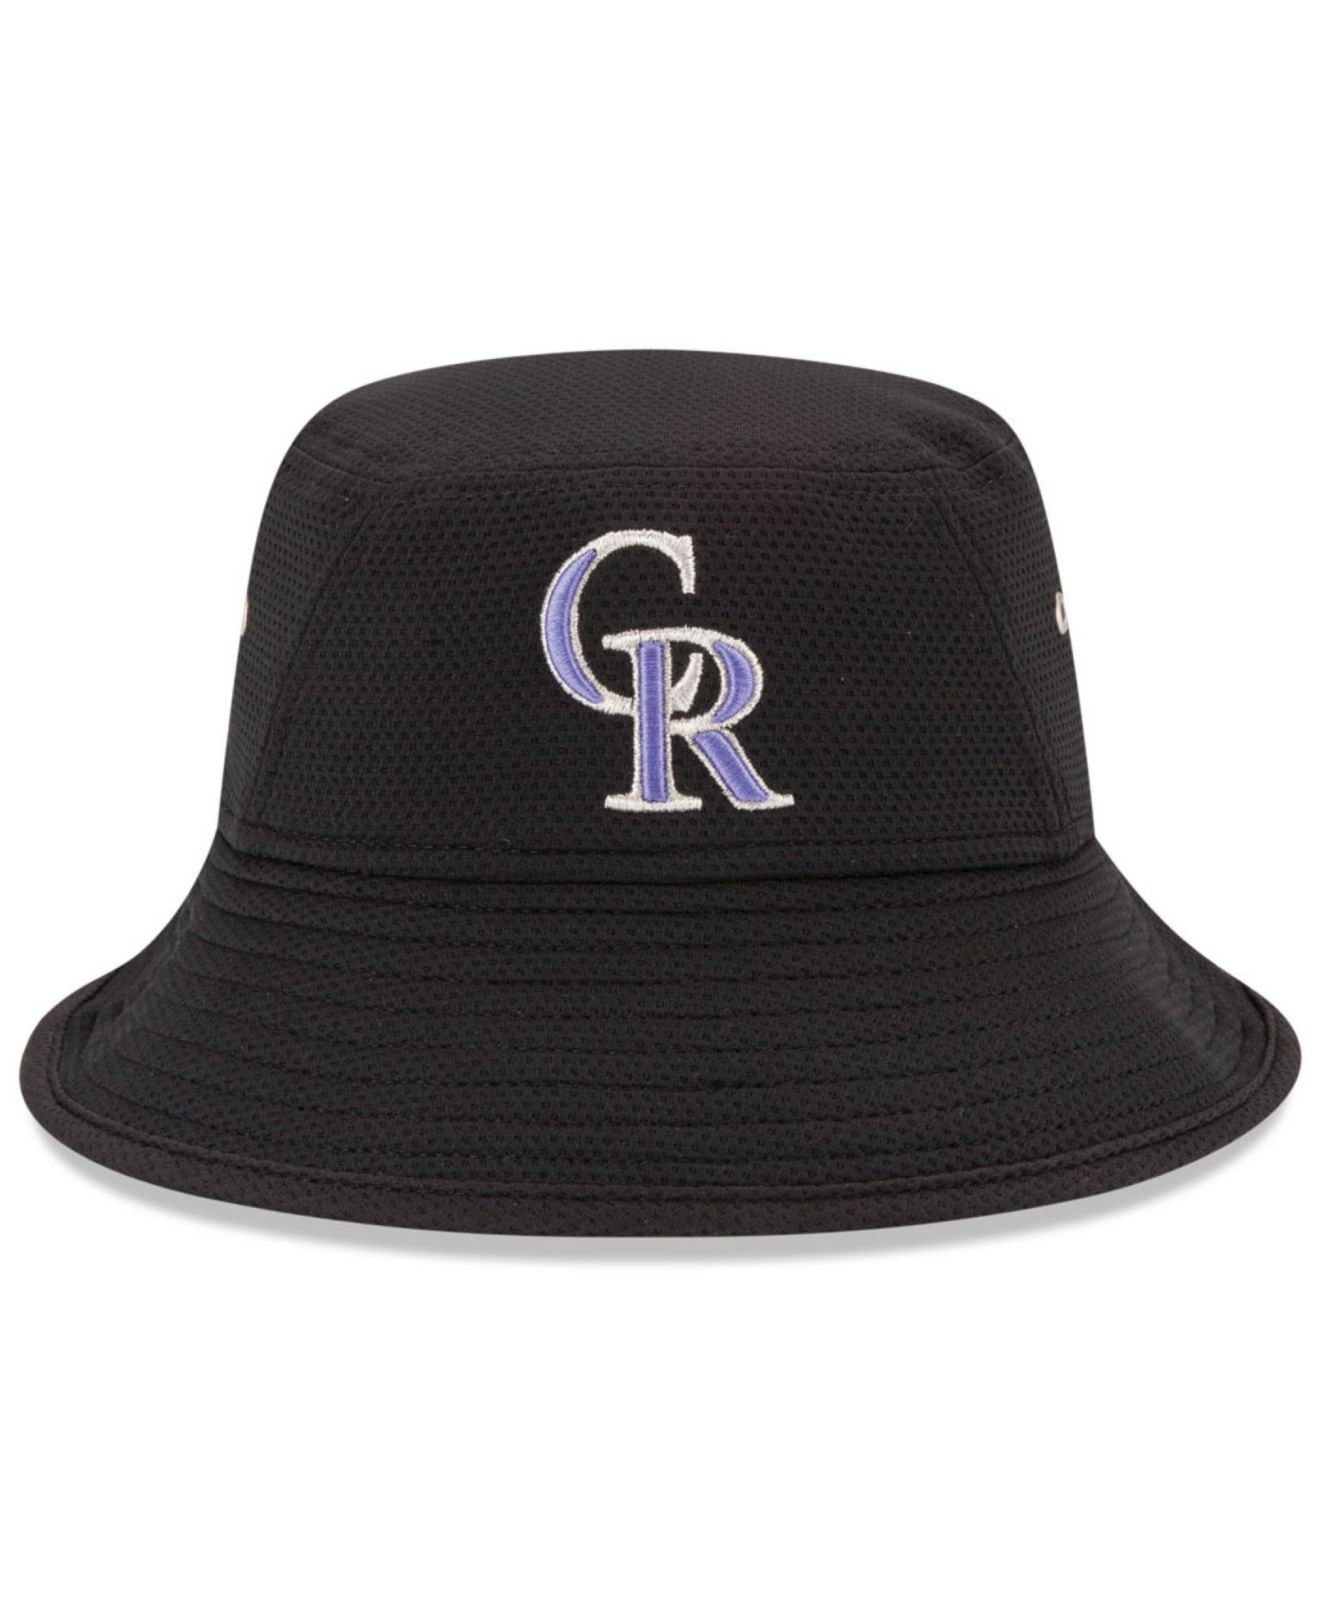 Lyst - KTZ Colorado Rockies Team Redux Bucket Hat in Black for Men